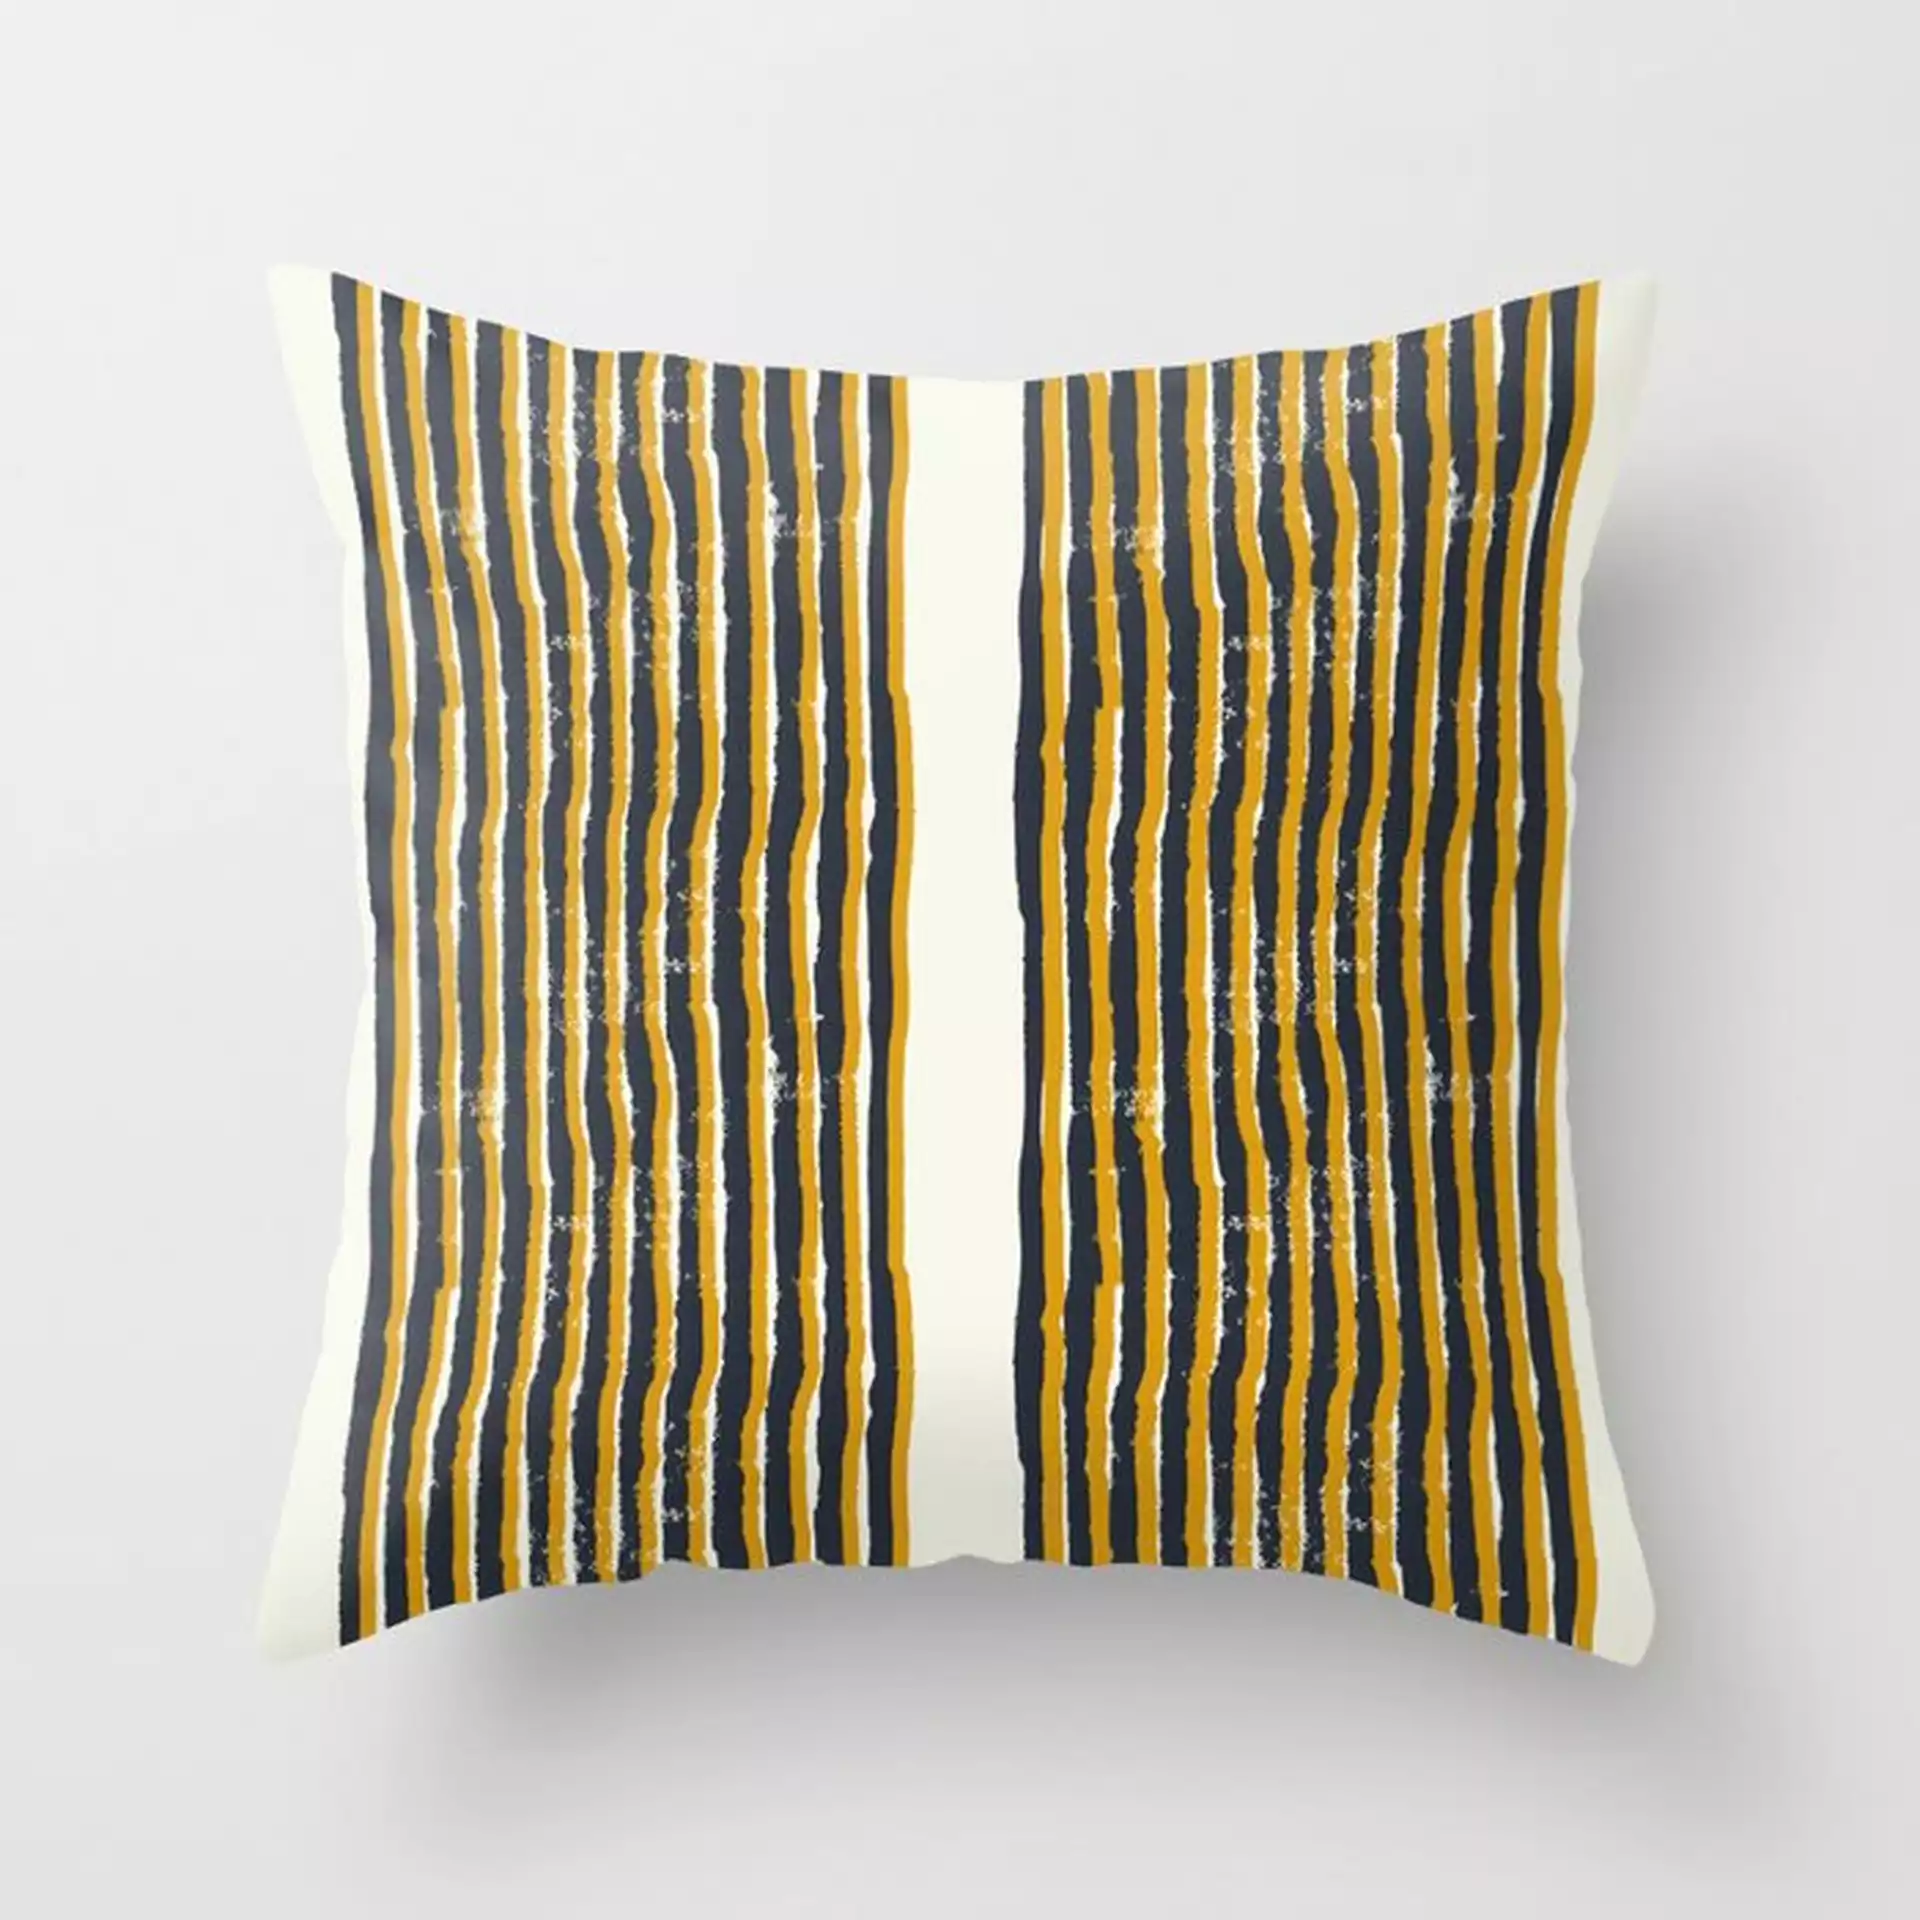 Zen Stripe Block Print Mustard Couch Throw Pillow by Becky Bailey - Cover (20" x 20") with pillow insert - Outdoor Pillow